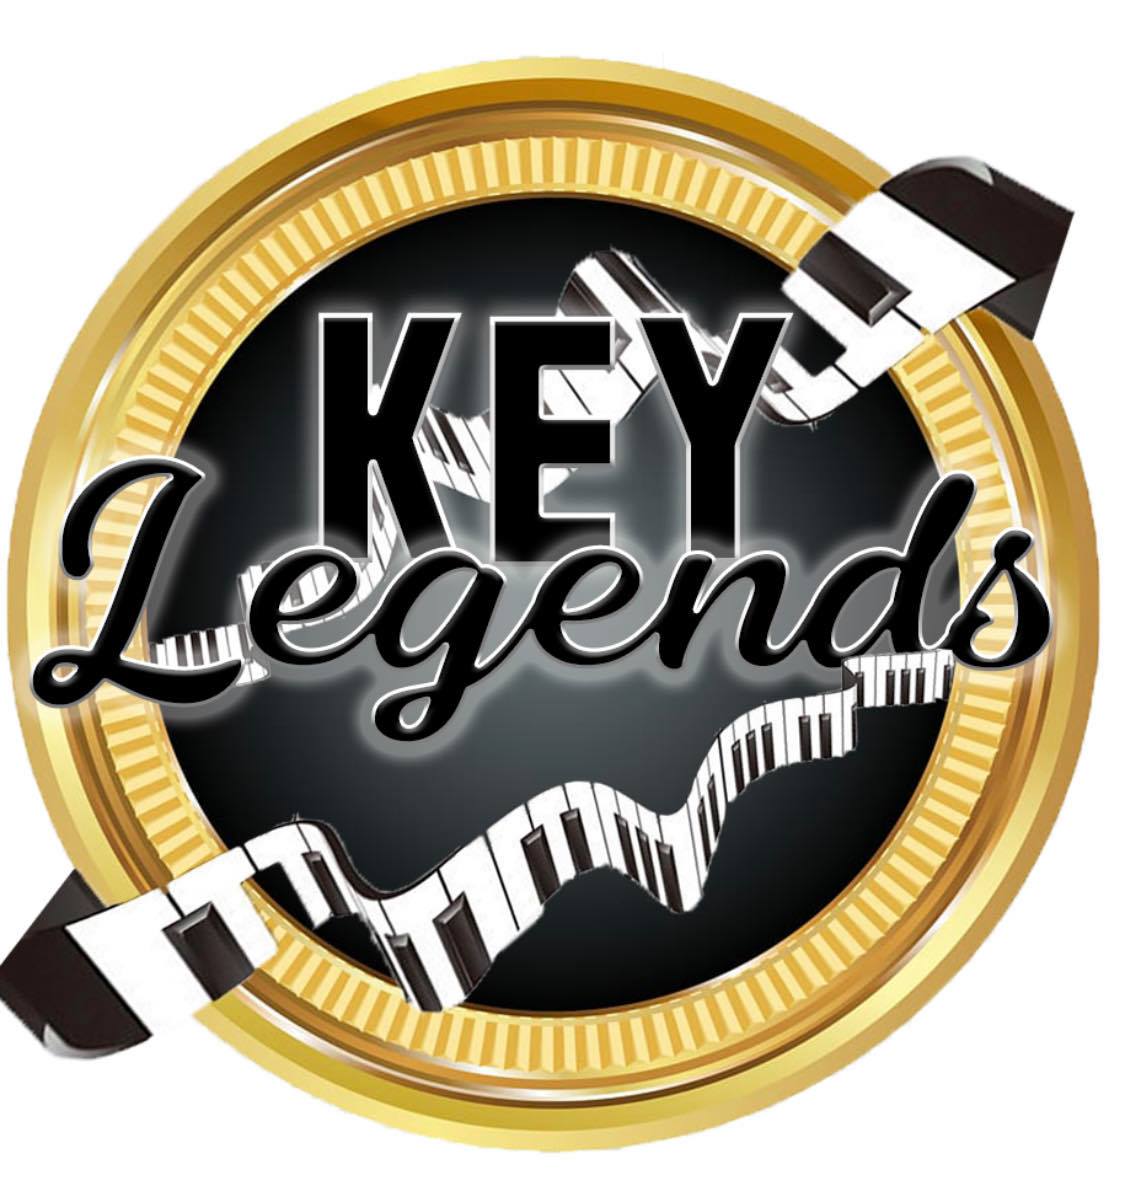 Key Legends